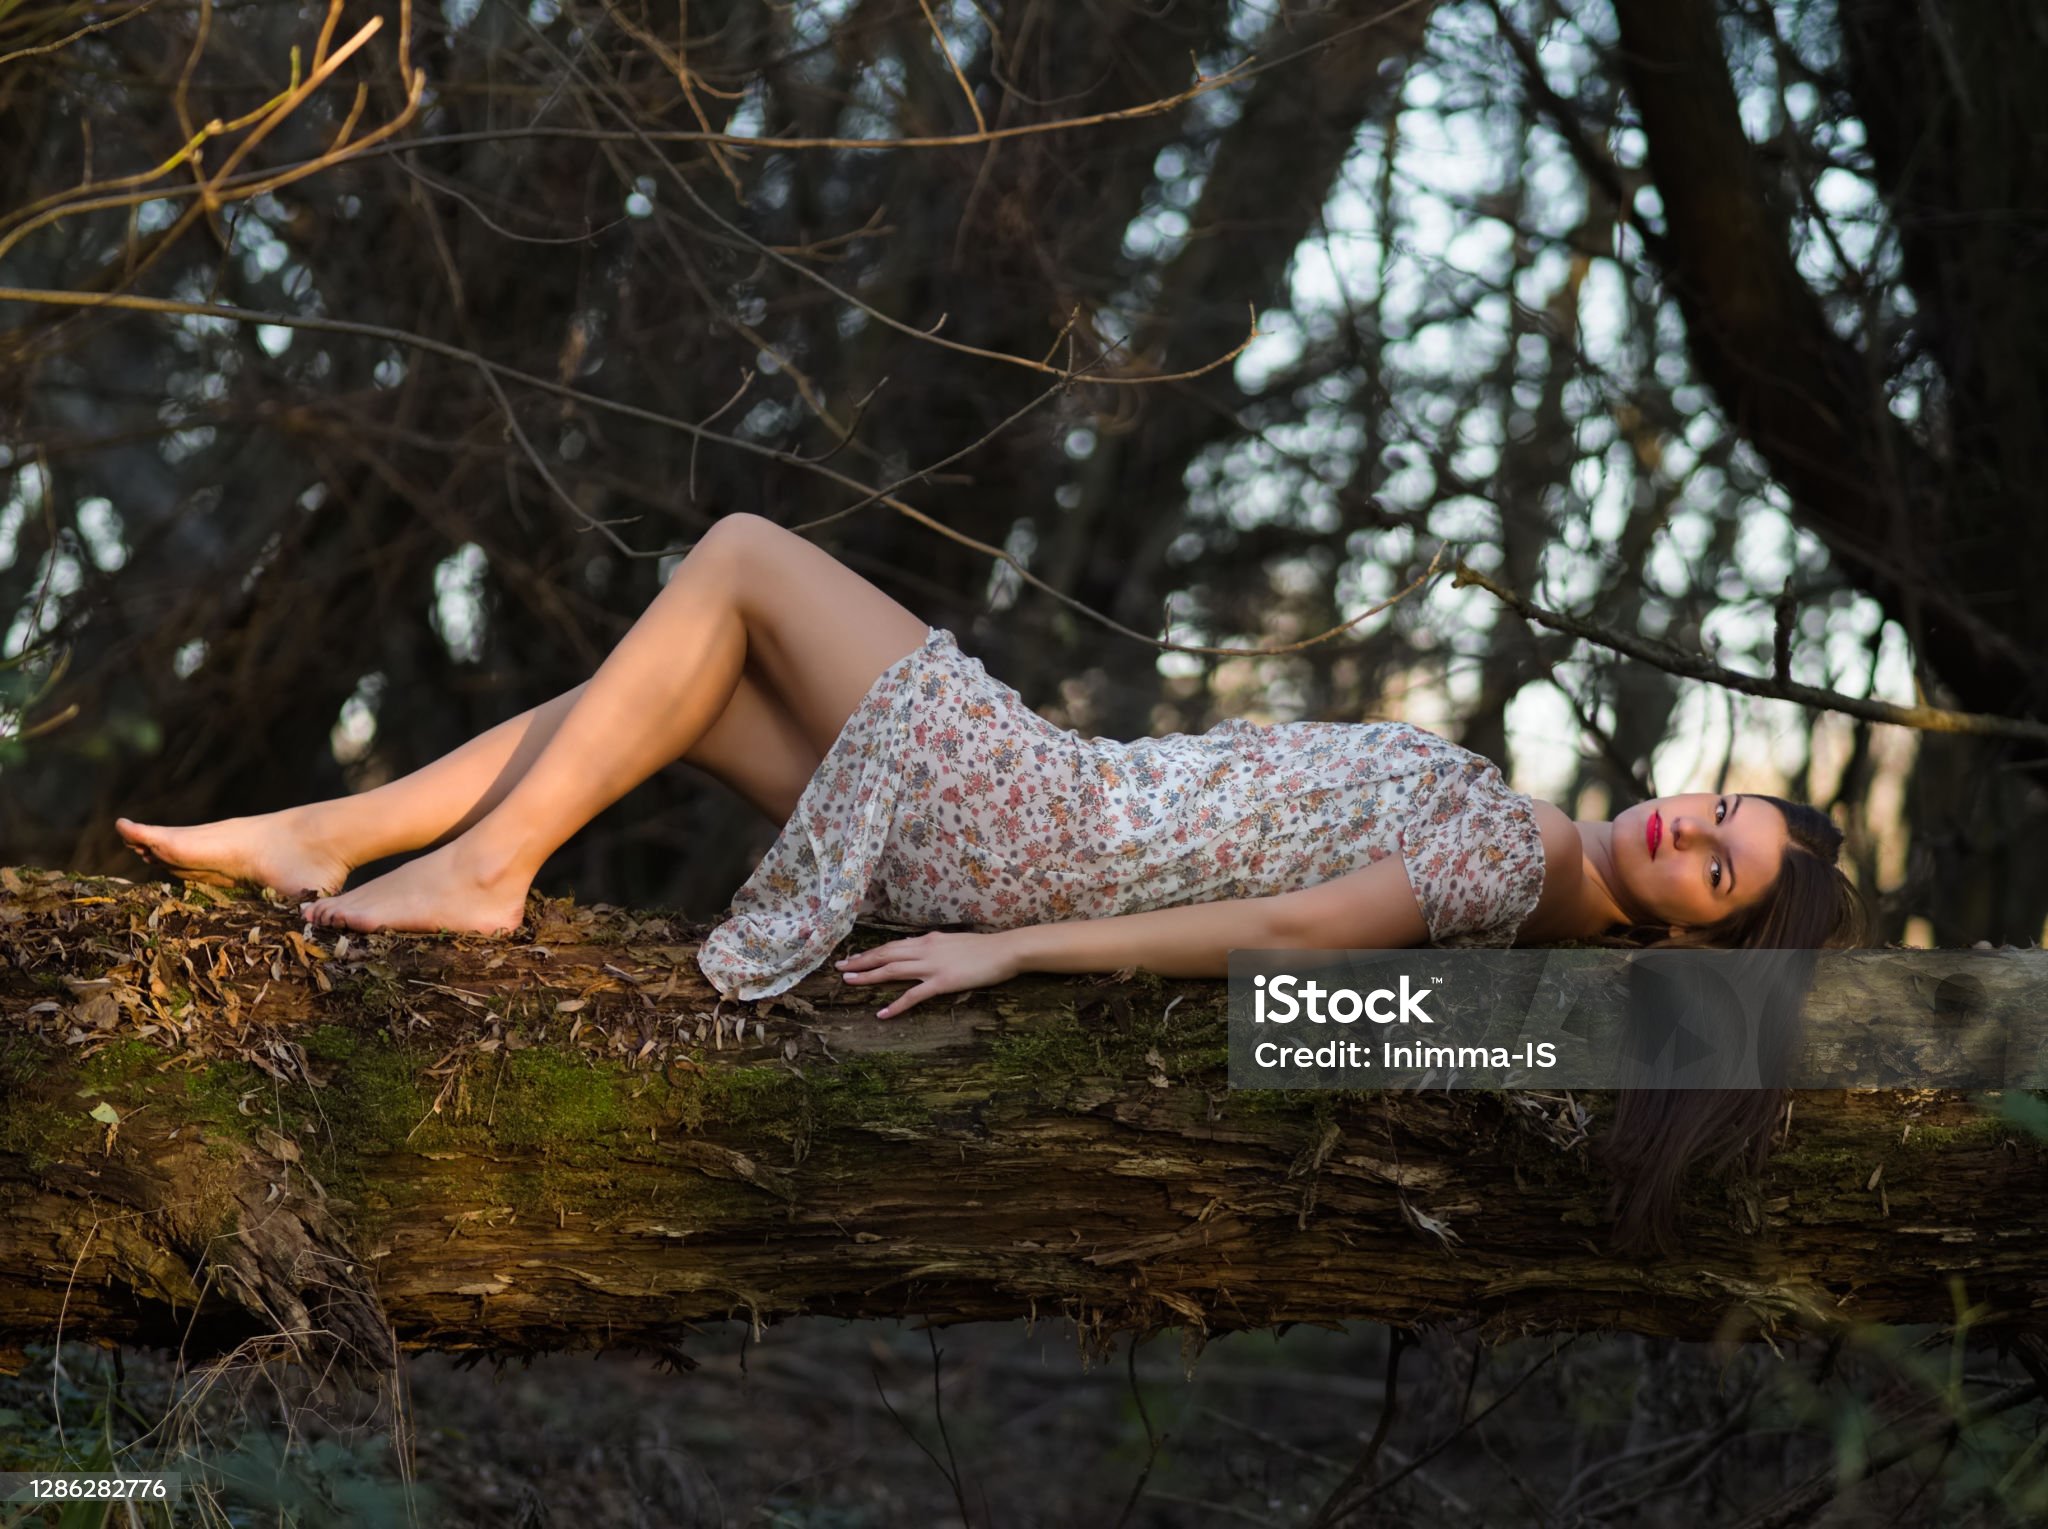 https://media.istockphoto.com/id/1286282776/photo/woman-in-floral-dress-laying-on-a-tree-in-the-forest.jpg?s=2048x2048&amp;w=is&amp;k=20&amp;c=cZyfBLfTYTmlISXGAIvA0bQRT8hCHvgbdPCTBzSUT3Q=